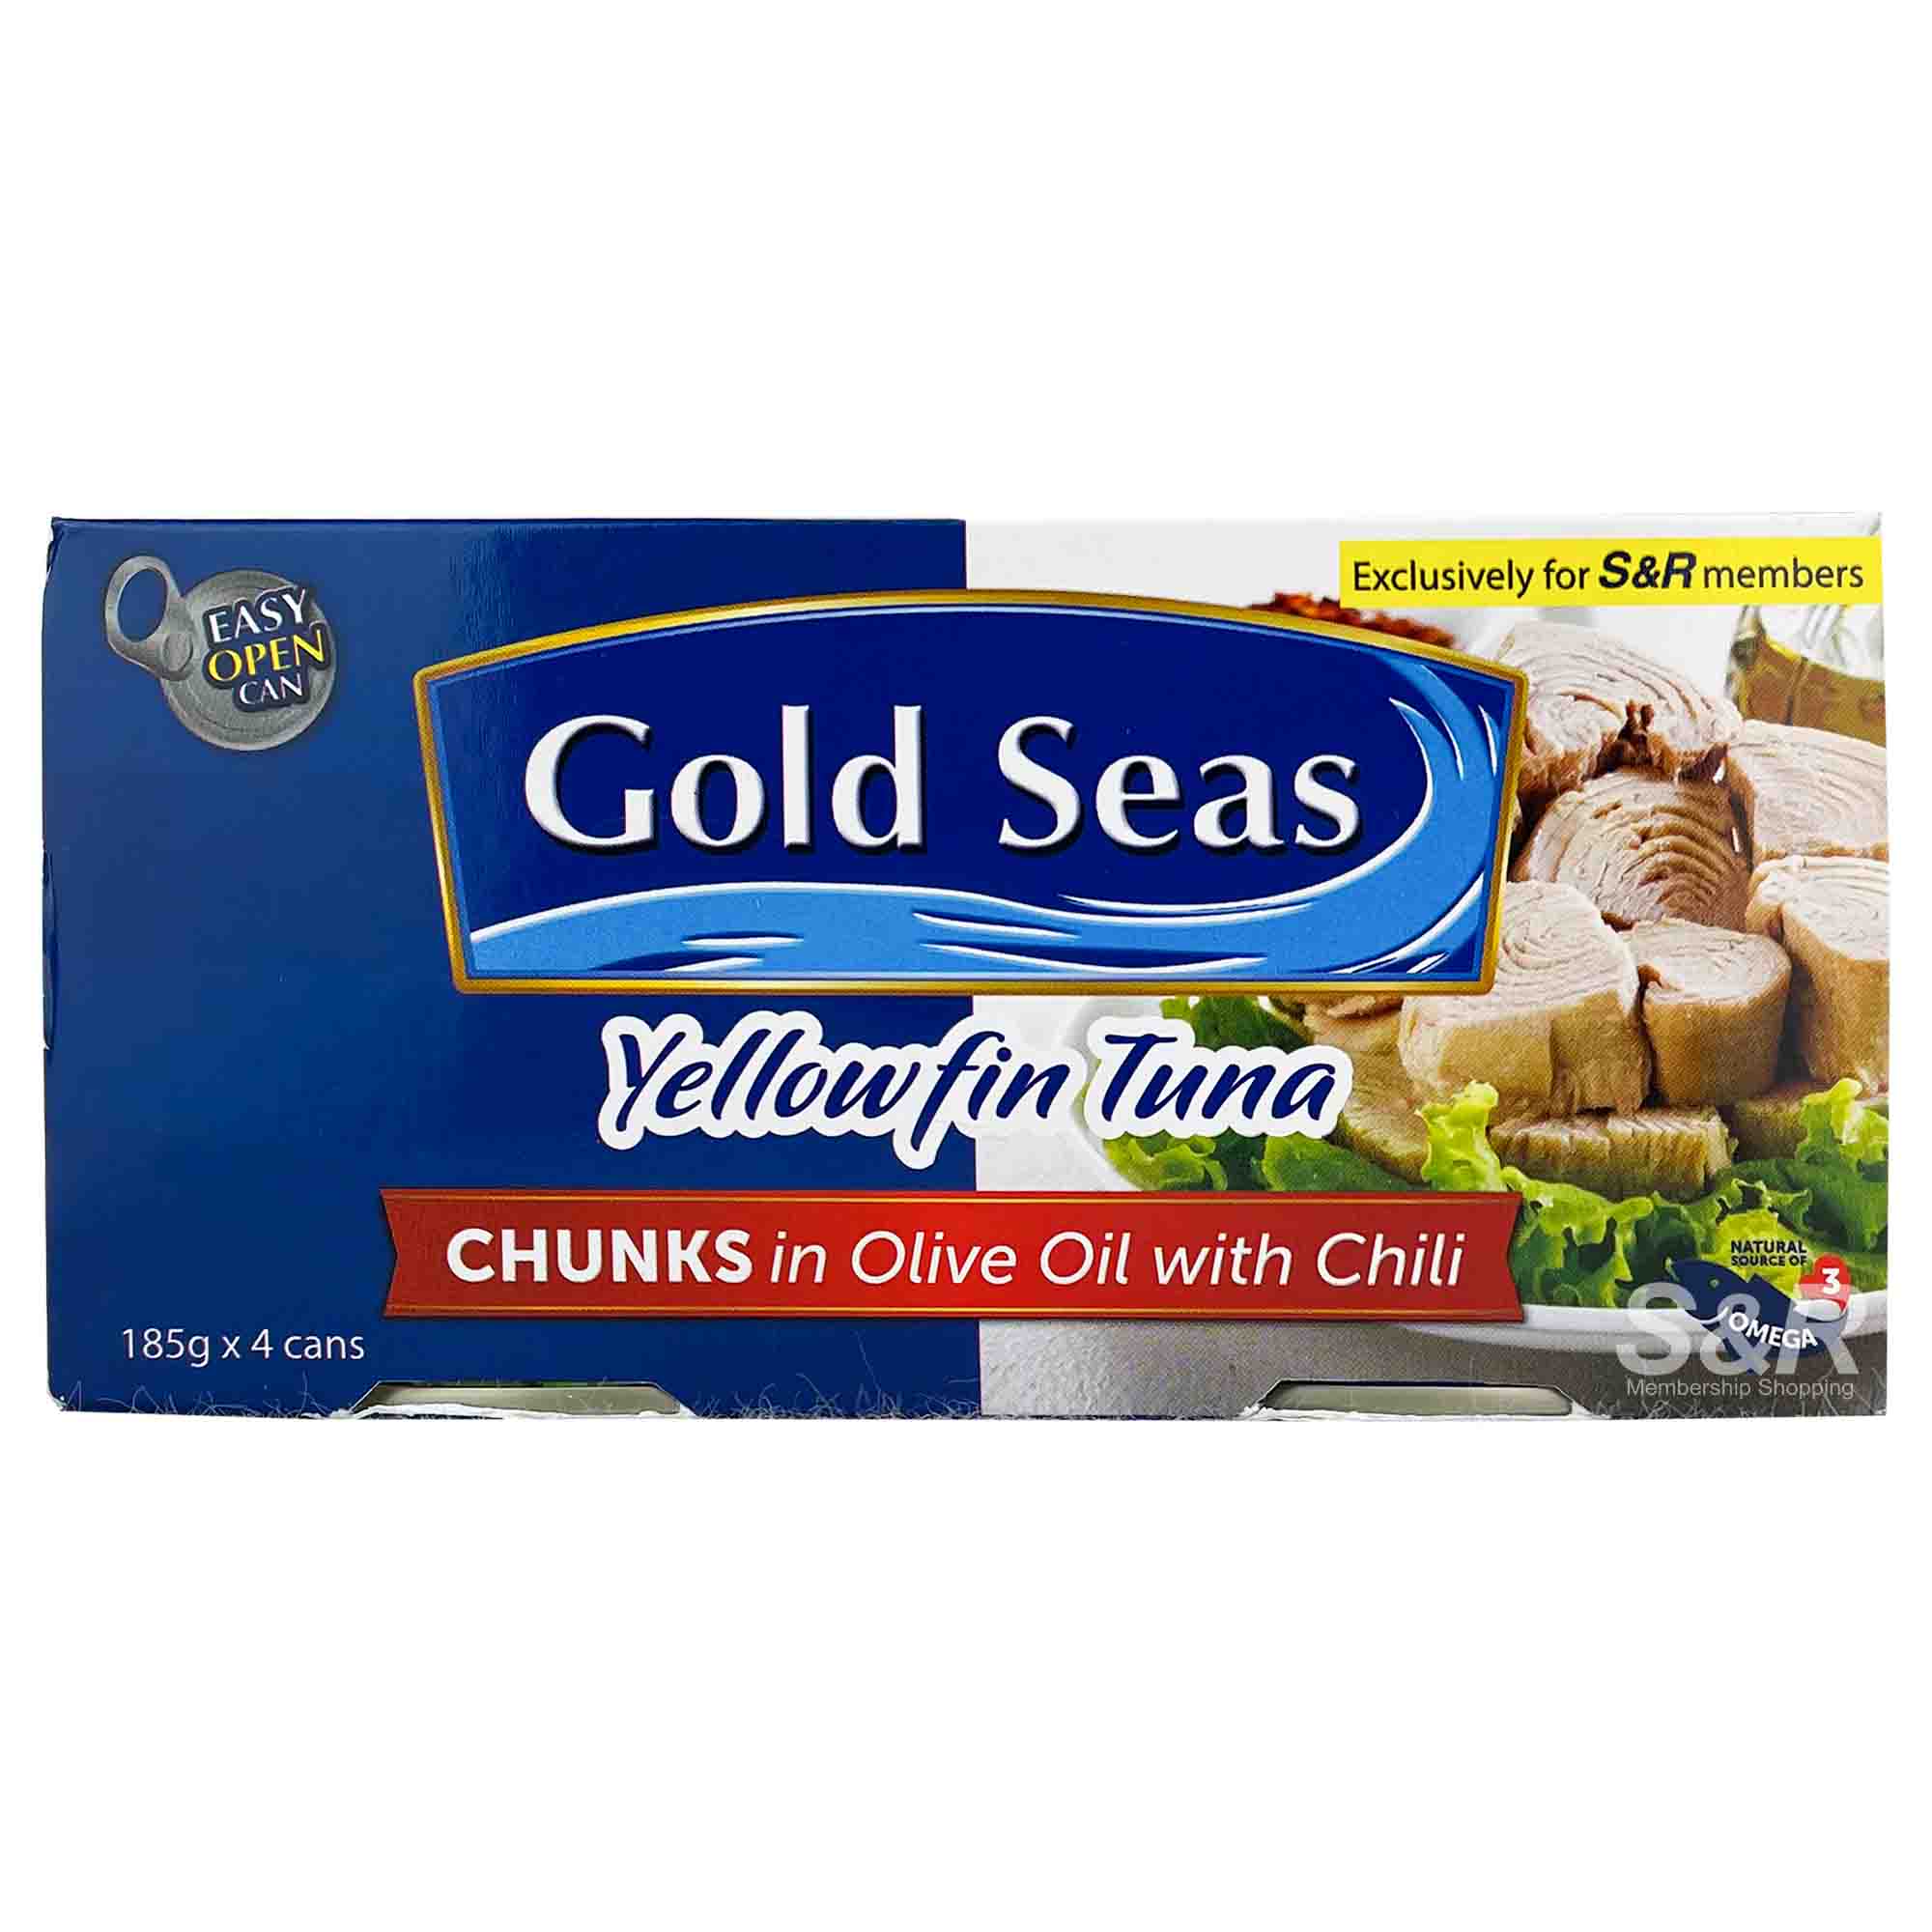 Gold Seas Chunks in Olive Oil with Chili Yellowfin Tuna (185g x 4pcs)